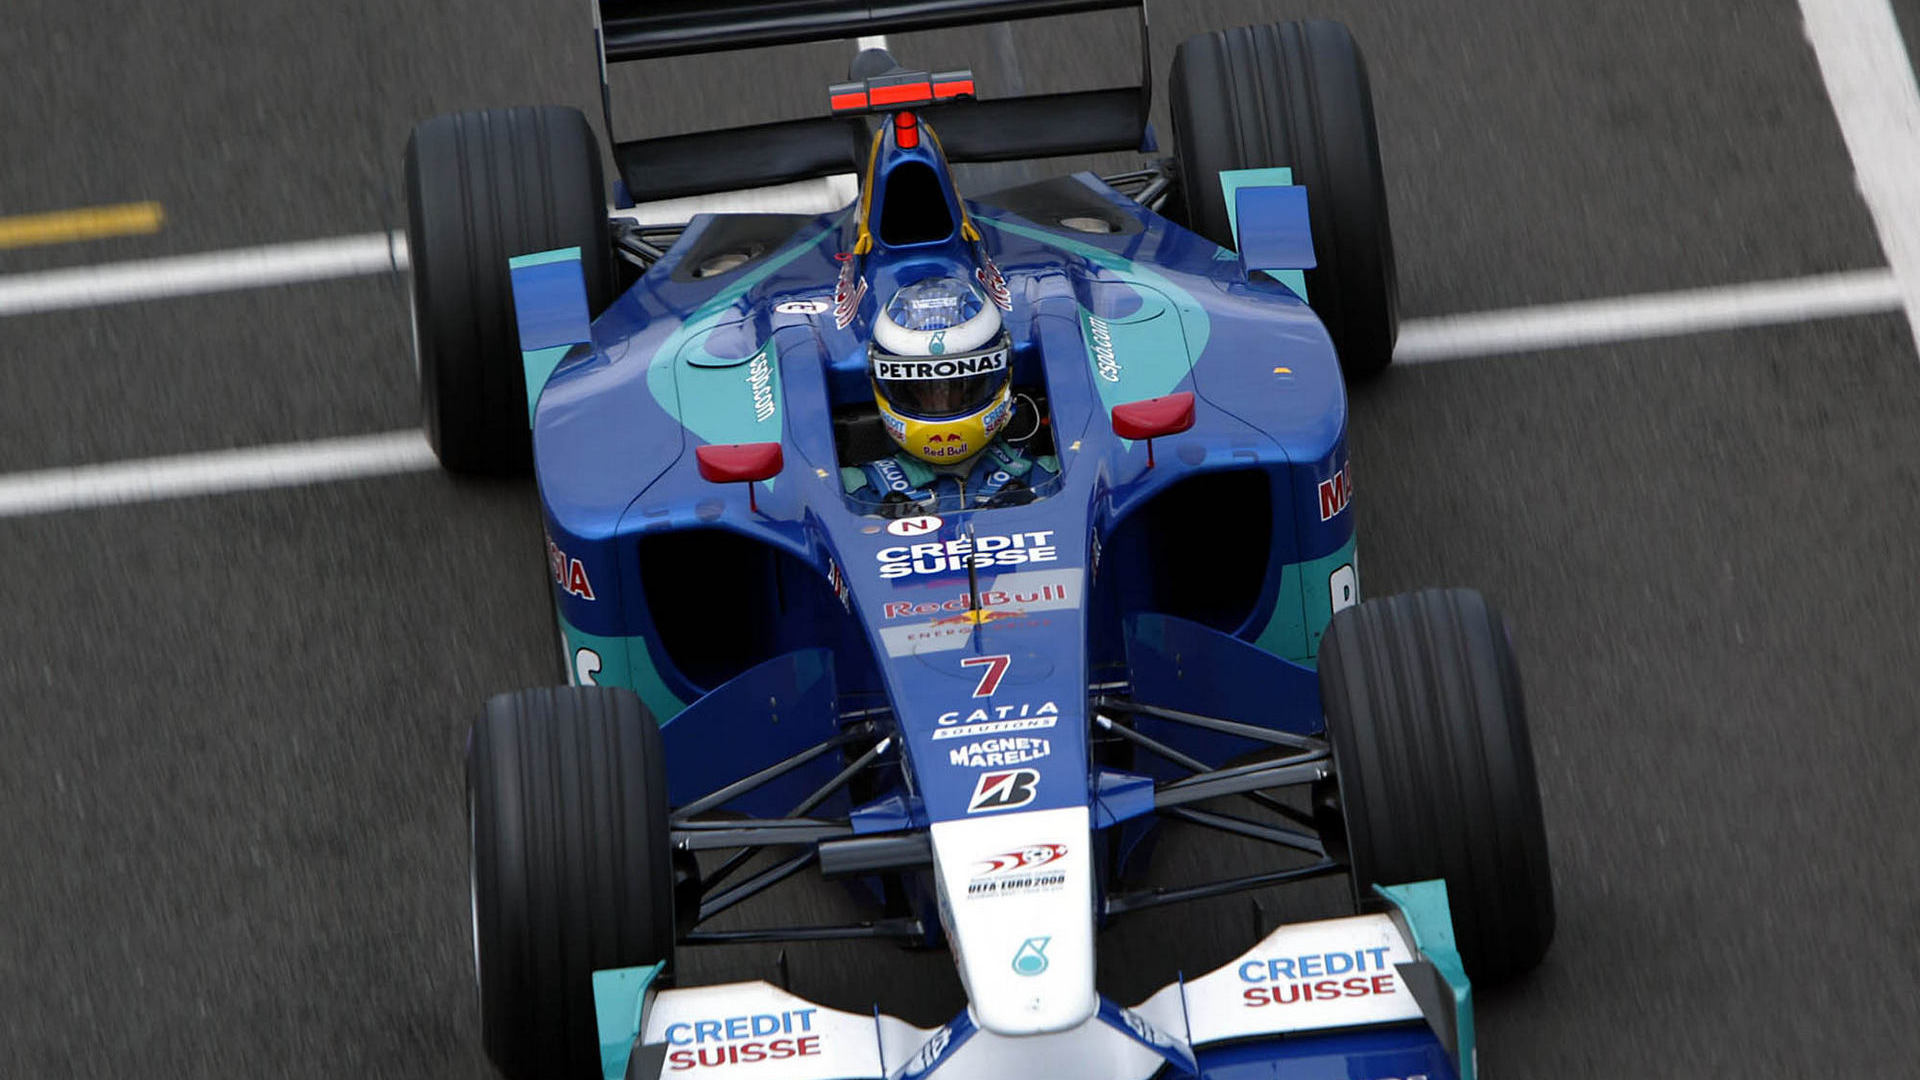 HD Wallpapers 2002 Formula 1 Grand Prix of Great Britain | F1-